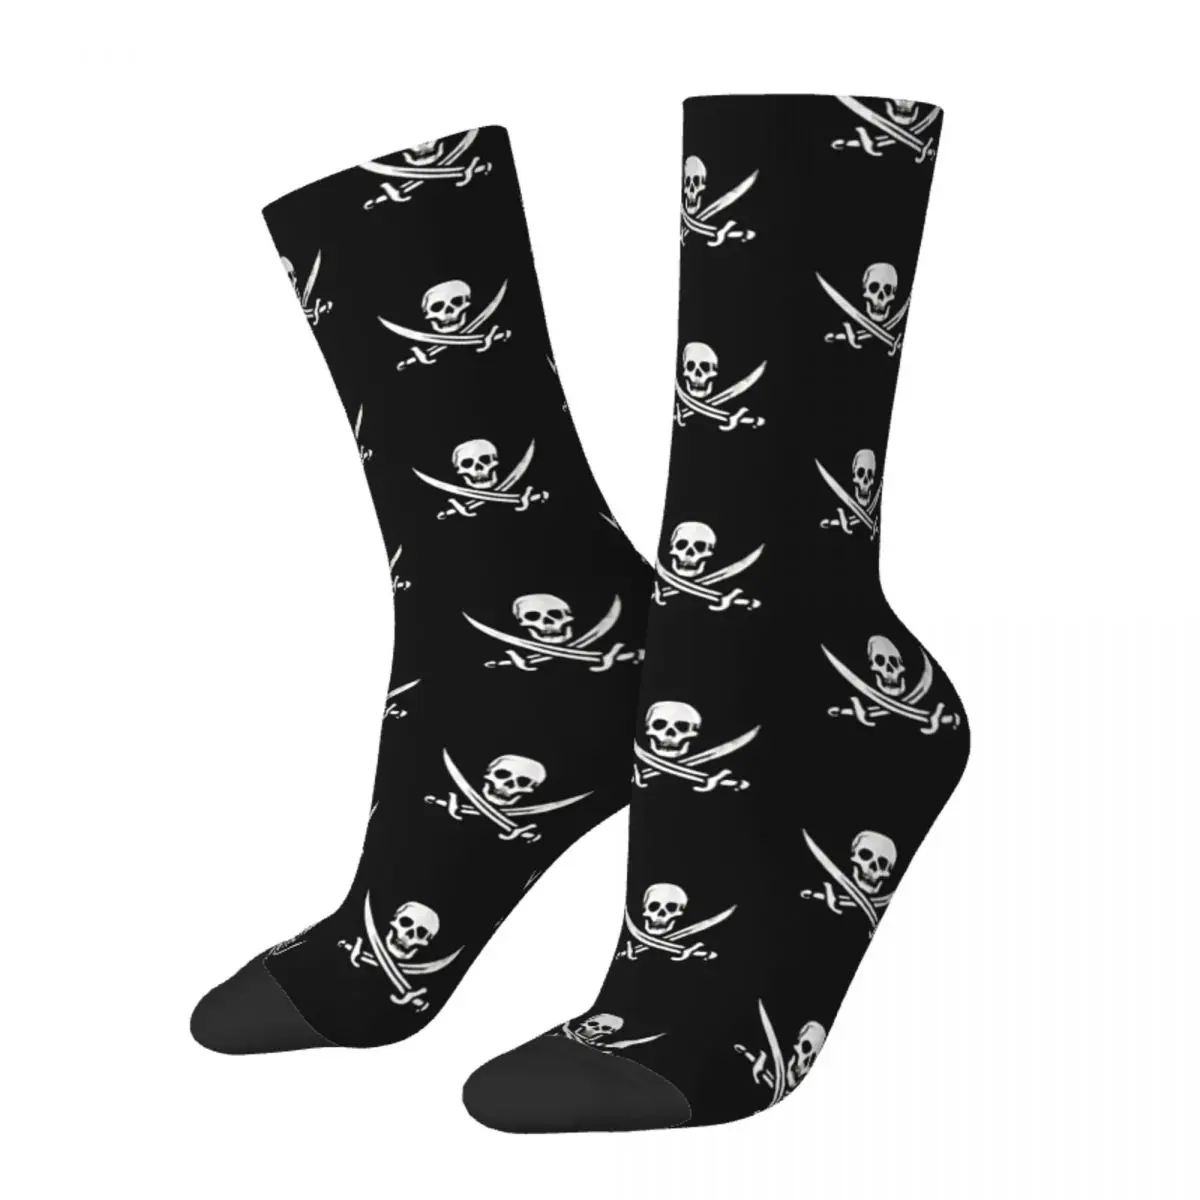 

Happy Men's Socks Calico Jack Sword Retro Harajuku Pirate Flag Hip Hop Novelty Crew Crazy Sock Gift Pattern Printed